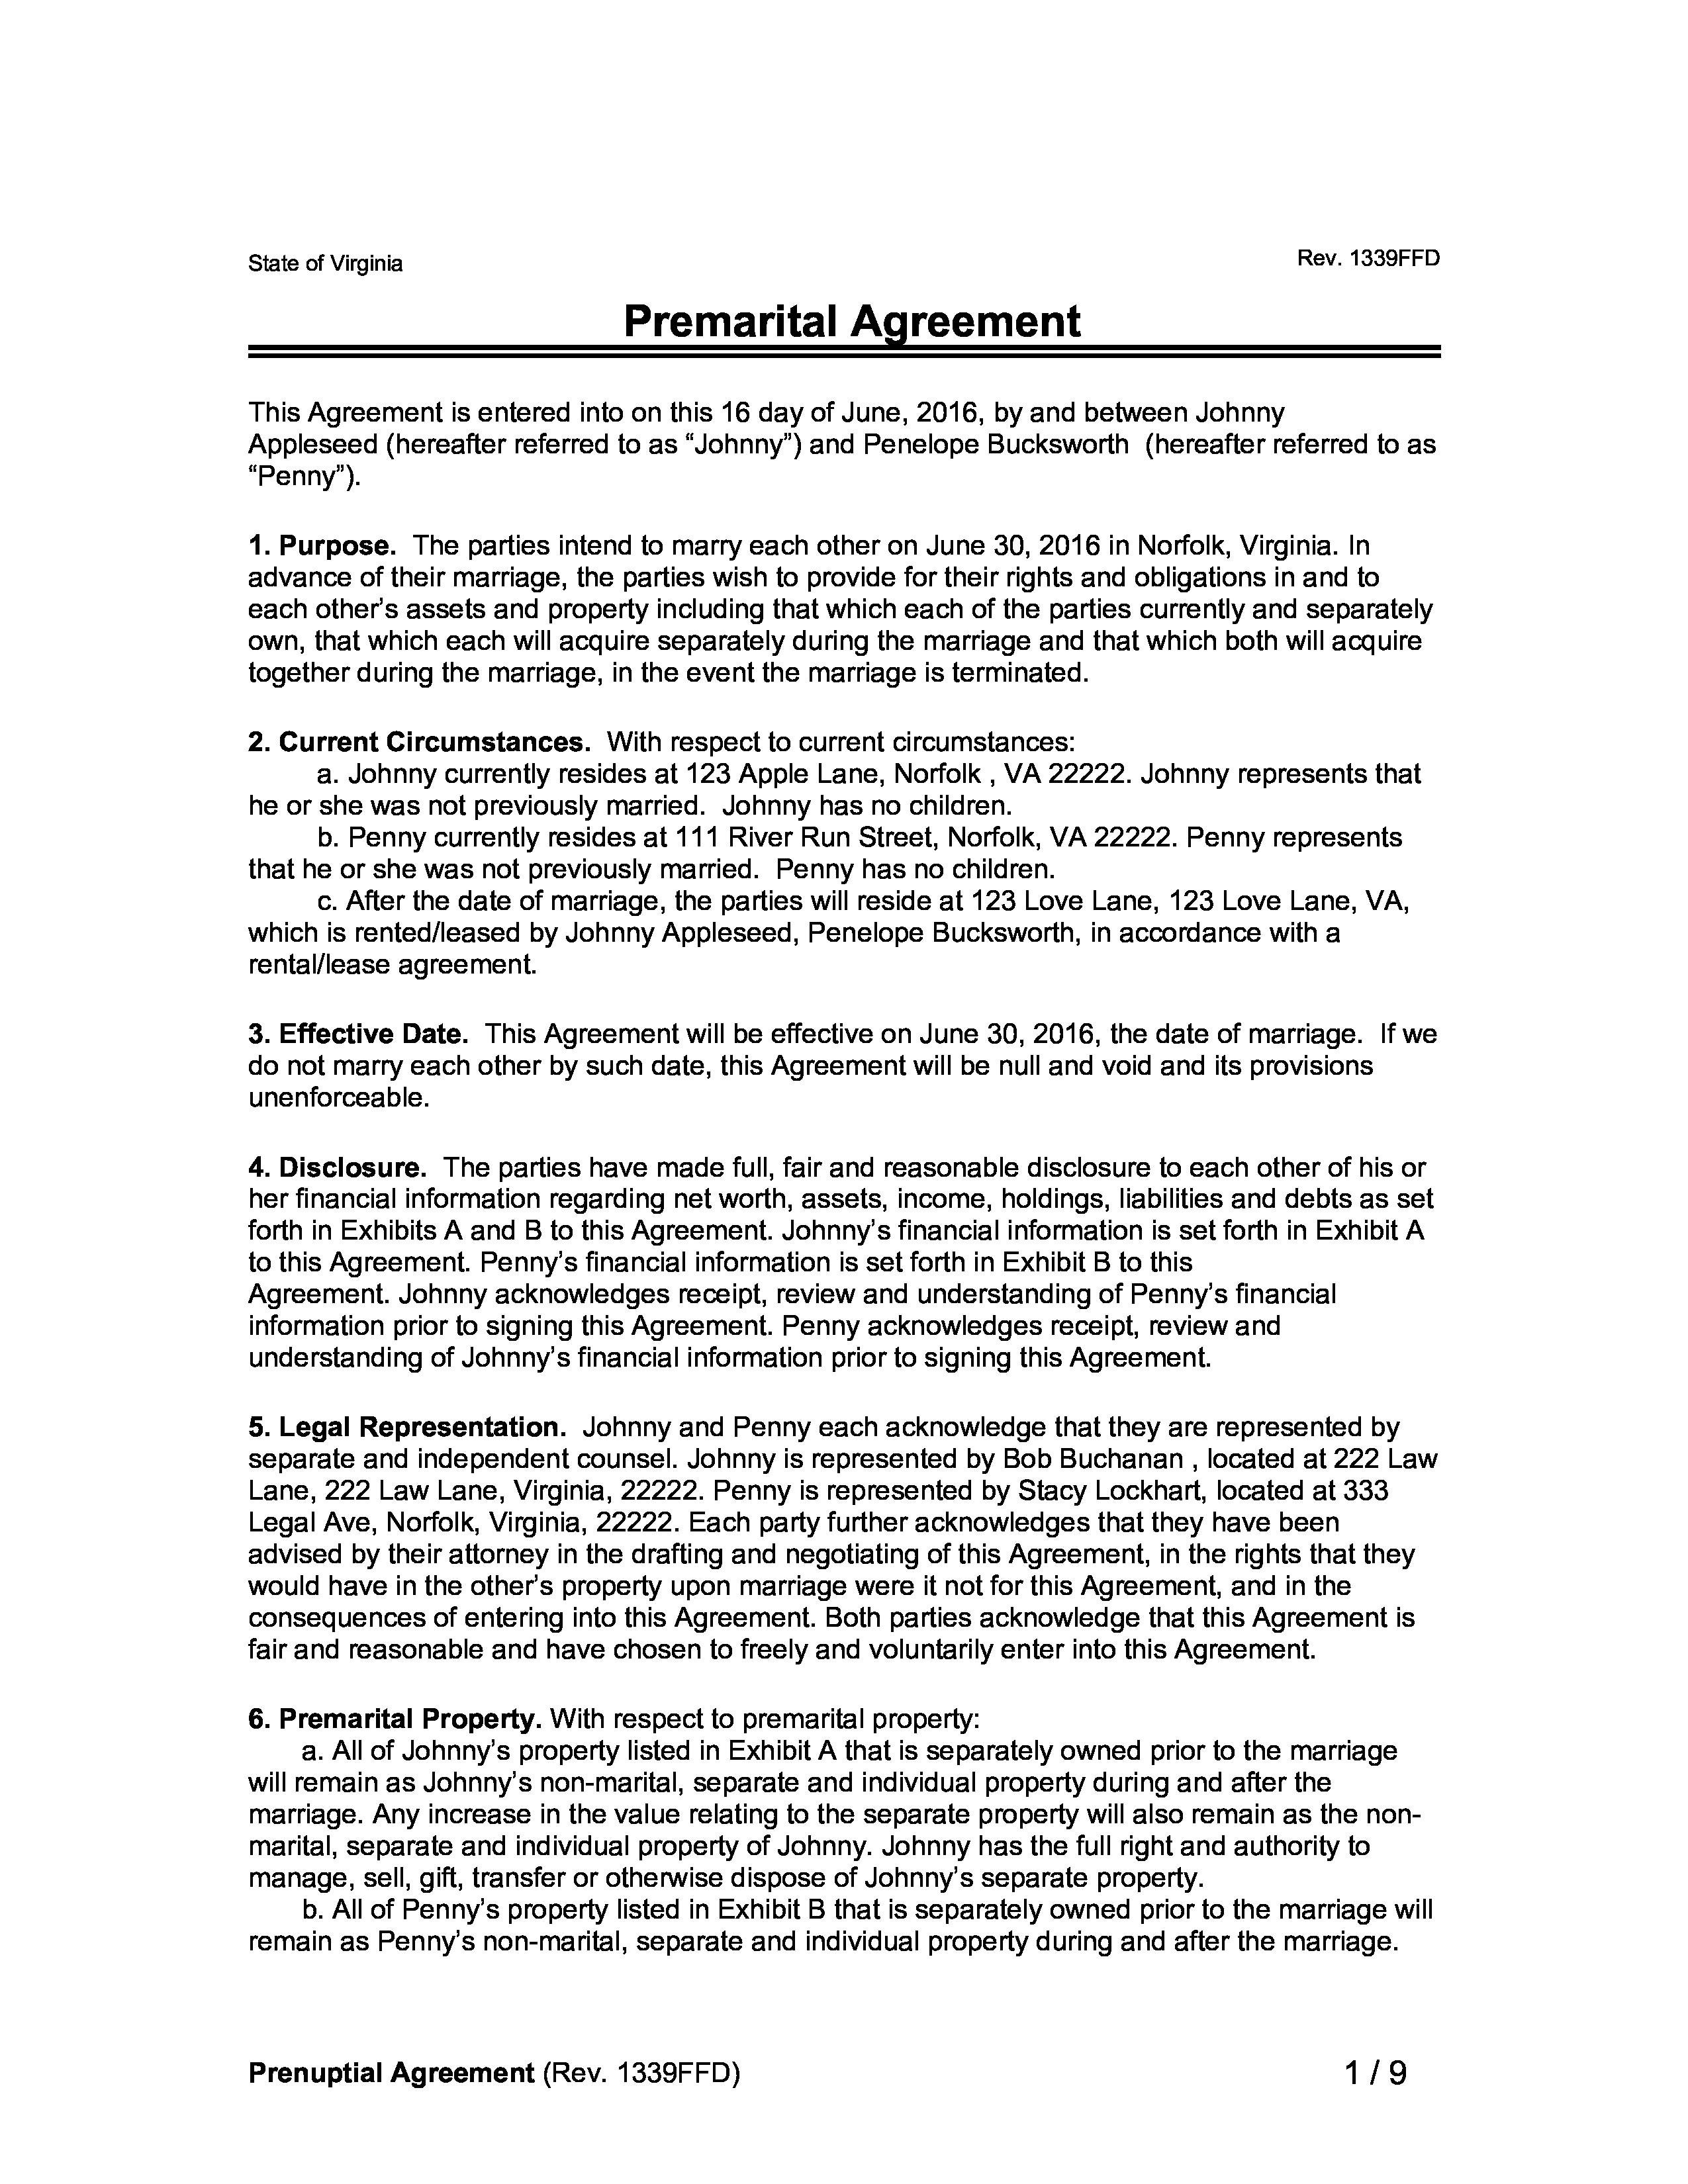 Free Prenuptial Agreement Template Australia 20 Example Prenuptial Agreement Virginia Sample Docs For Word For